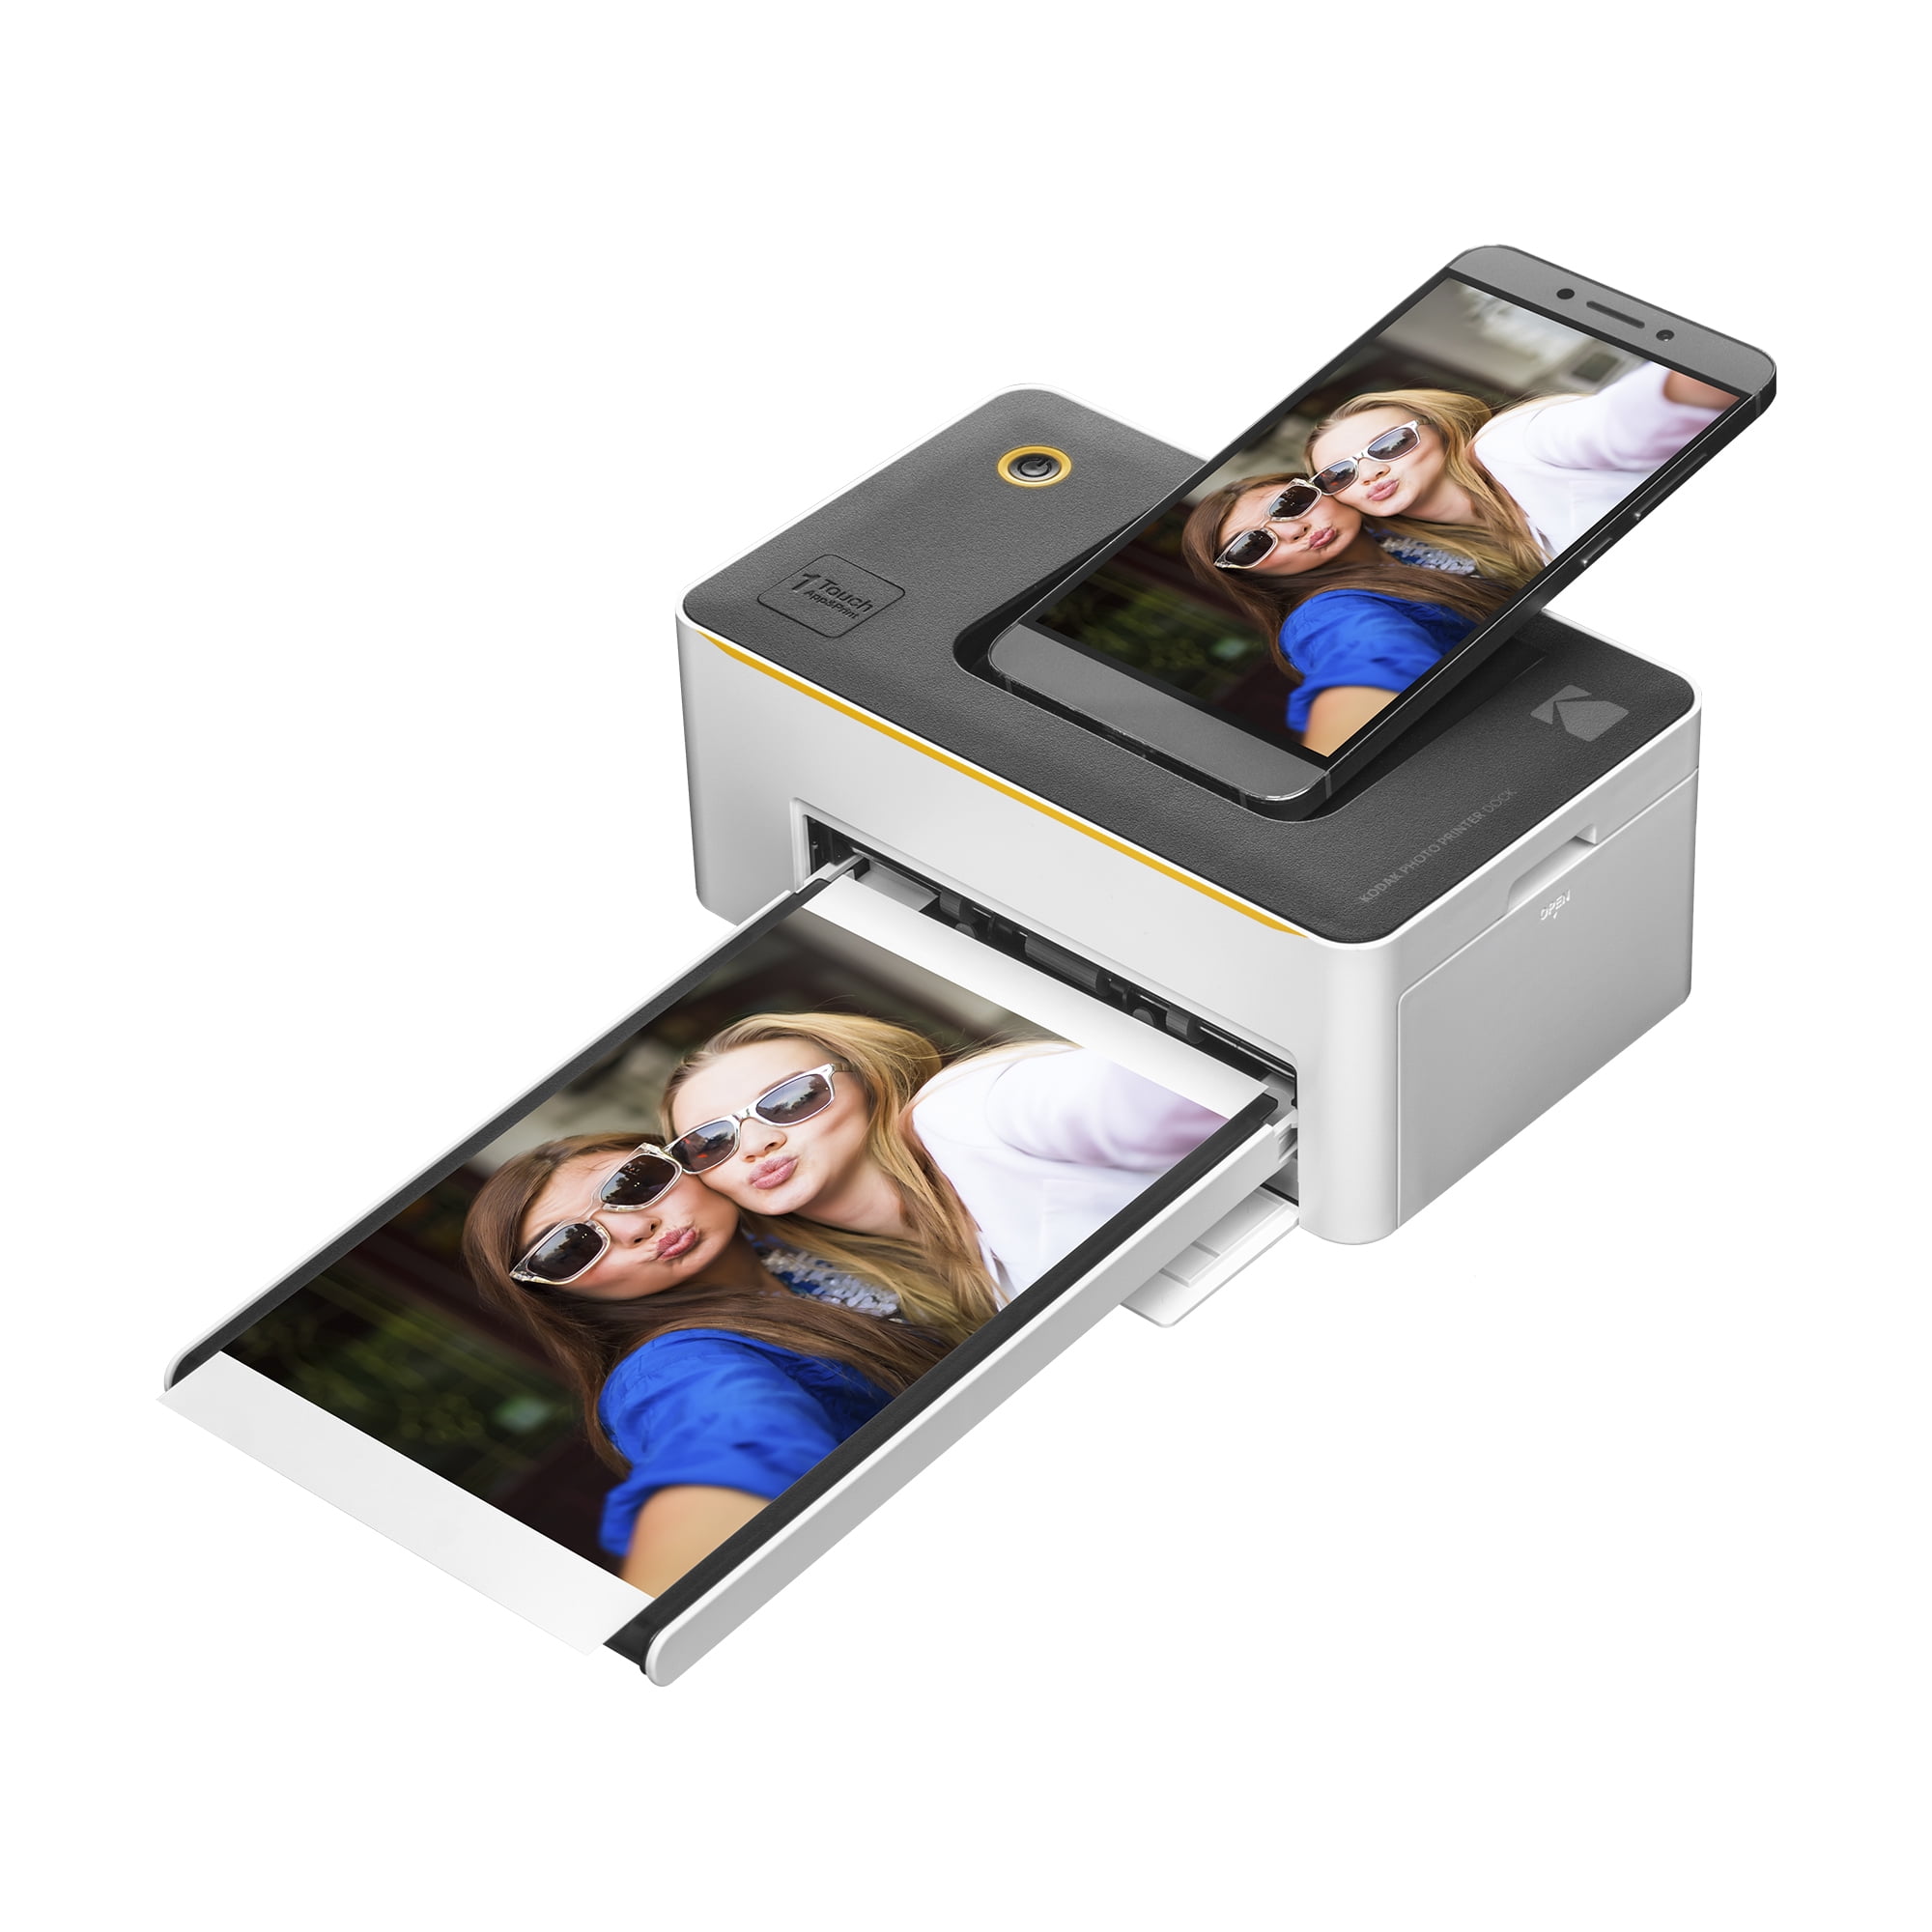 kodak-dock-plus-4x6-portable-instant-photo-printer-compatible-ios